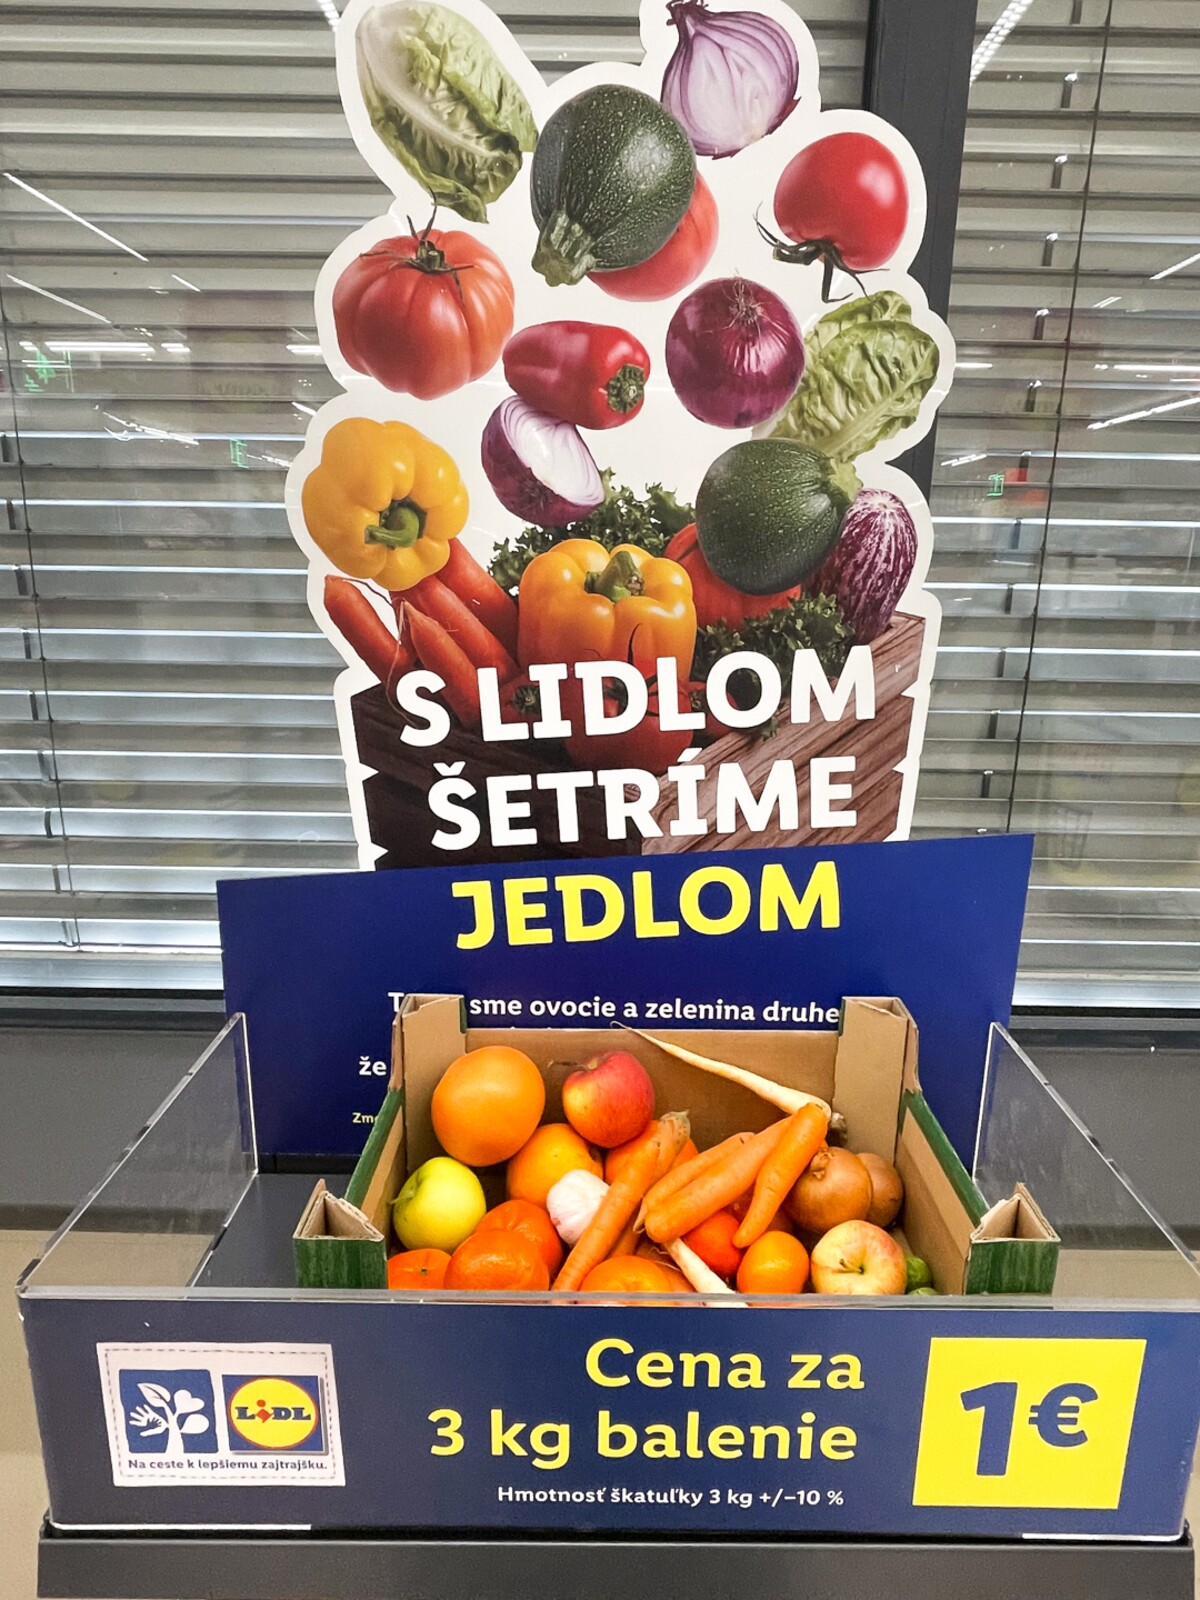 Lidl Slovensko, debničky, ovocie, zelenina